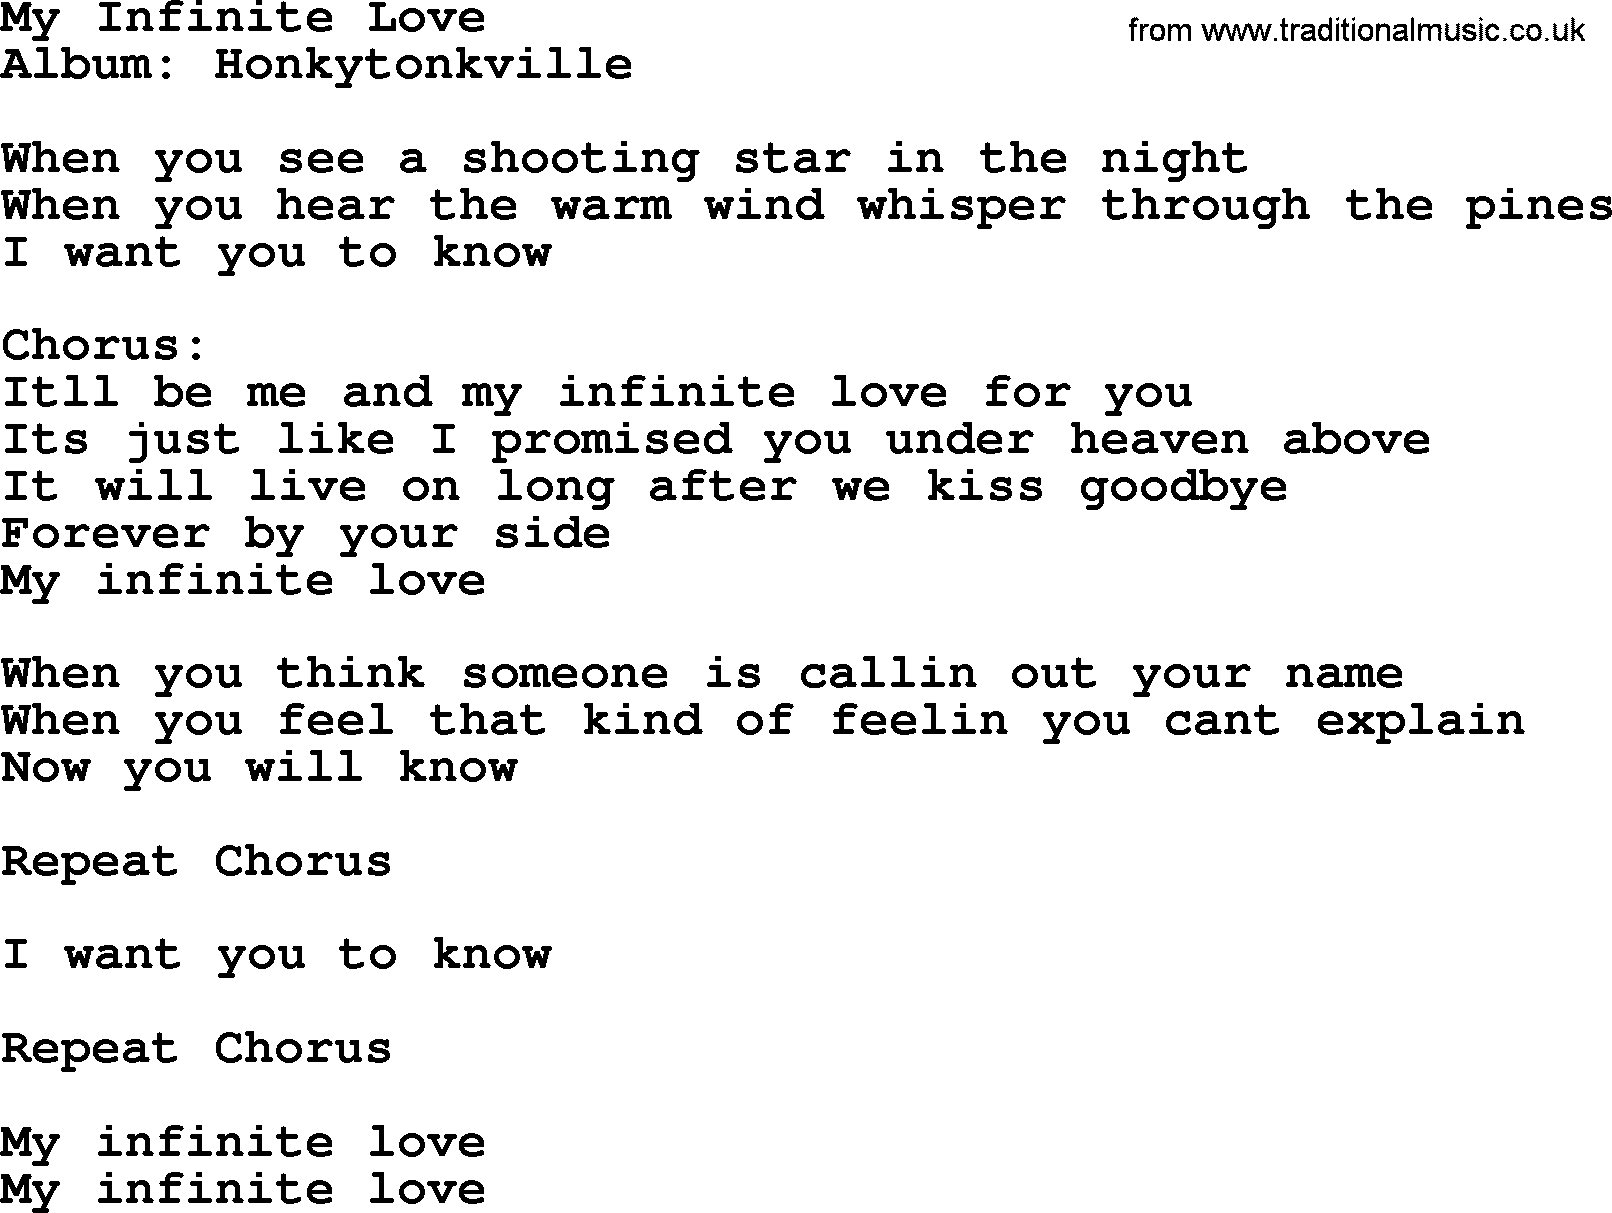 George Strait song: My Infinite Love, lyrics